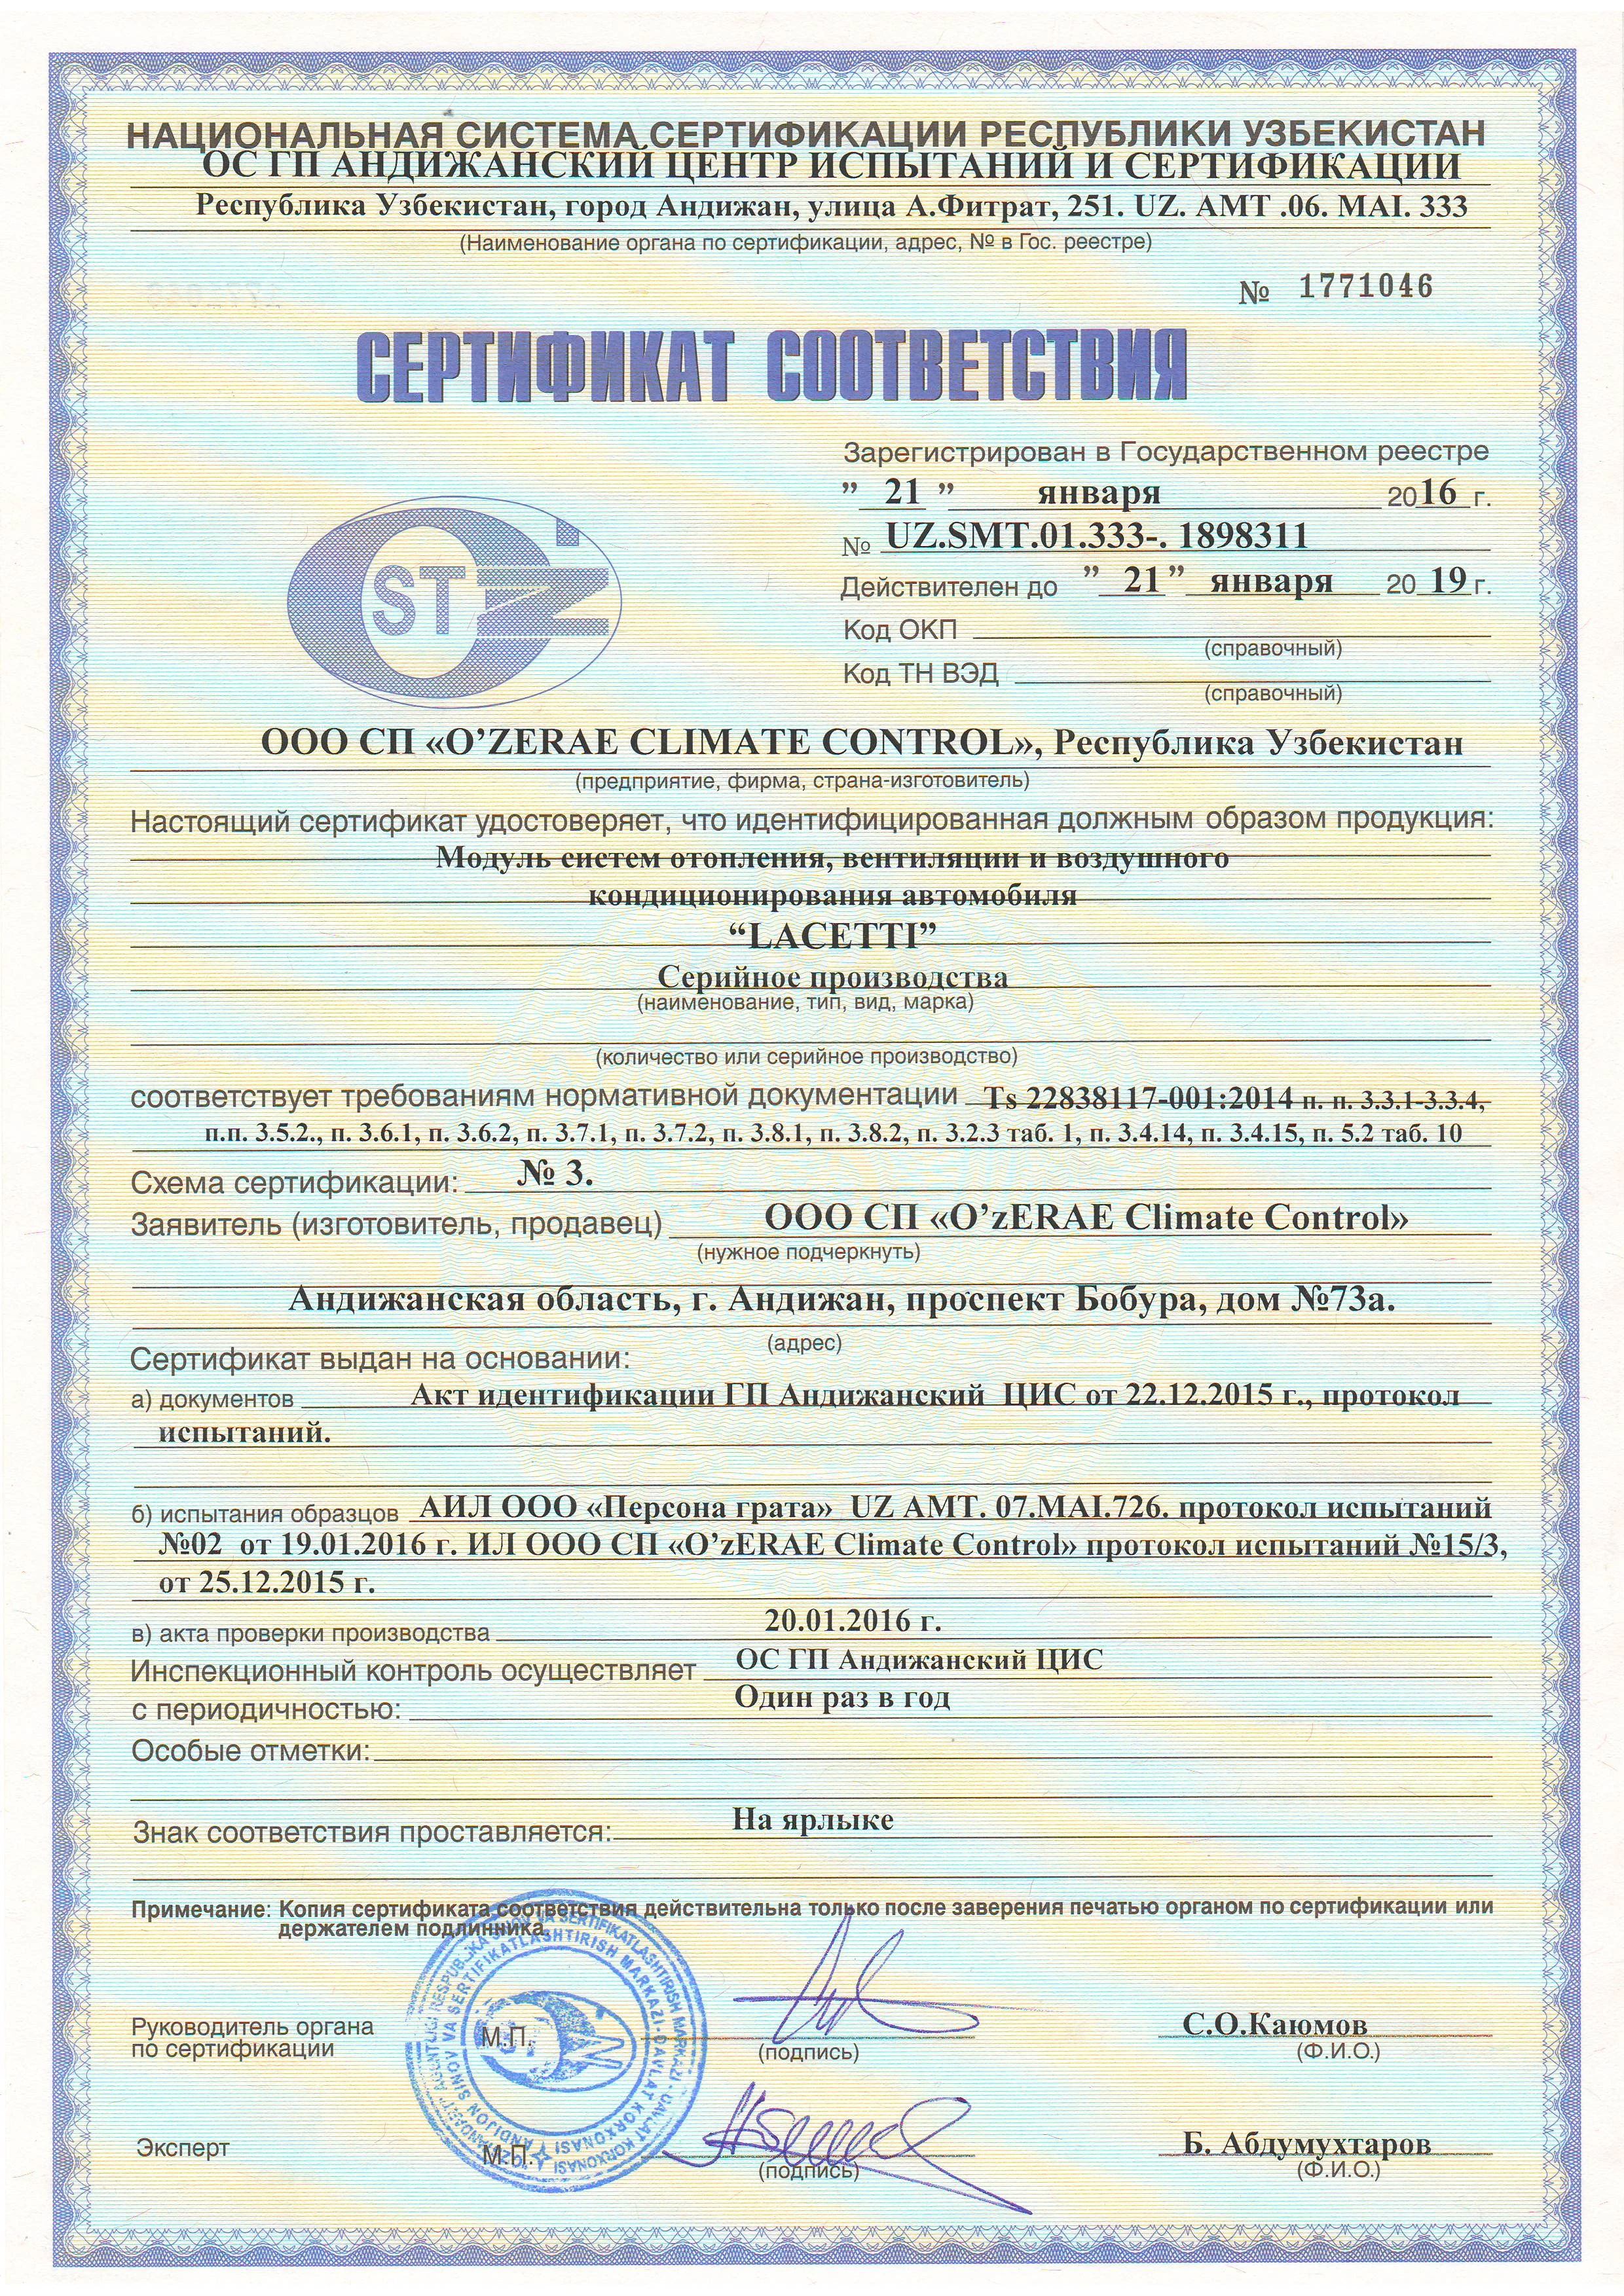 Сертификат_6